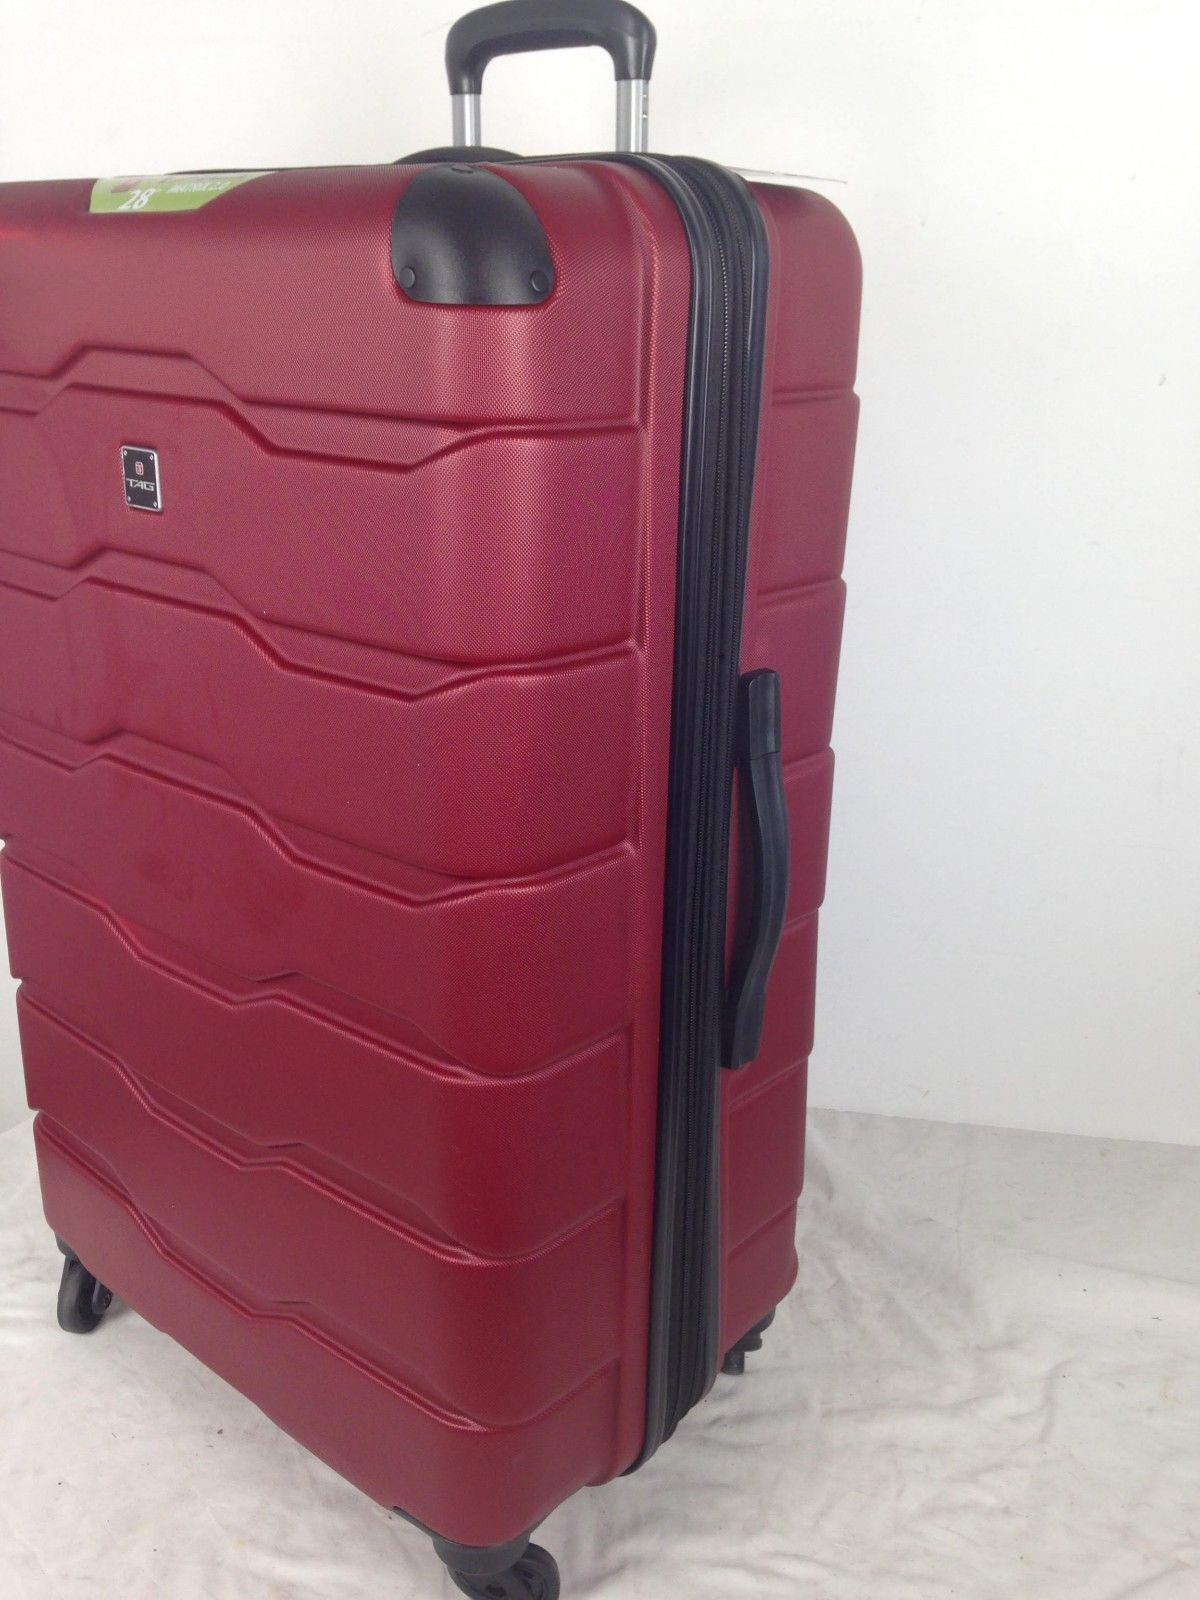 $280 Tag Matrix 2 28'' Hard 4 Wheel Spinner Lightweight Travel Suitcase Luggage